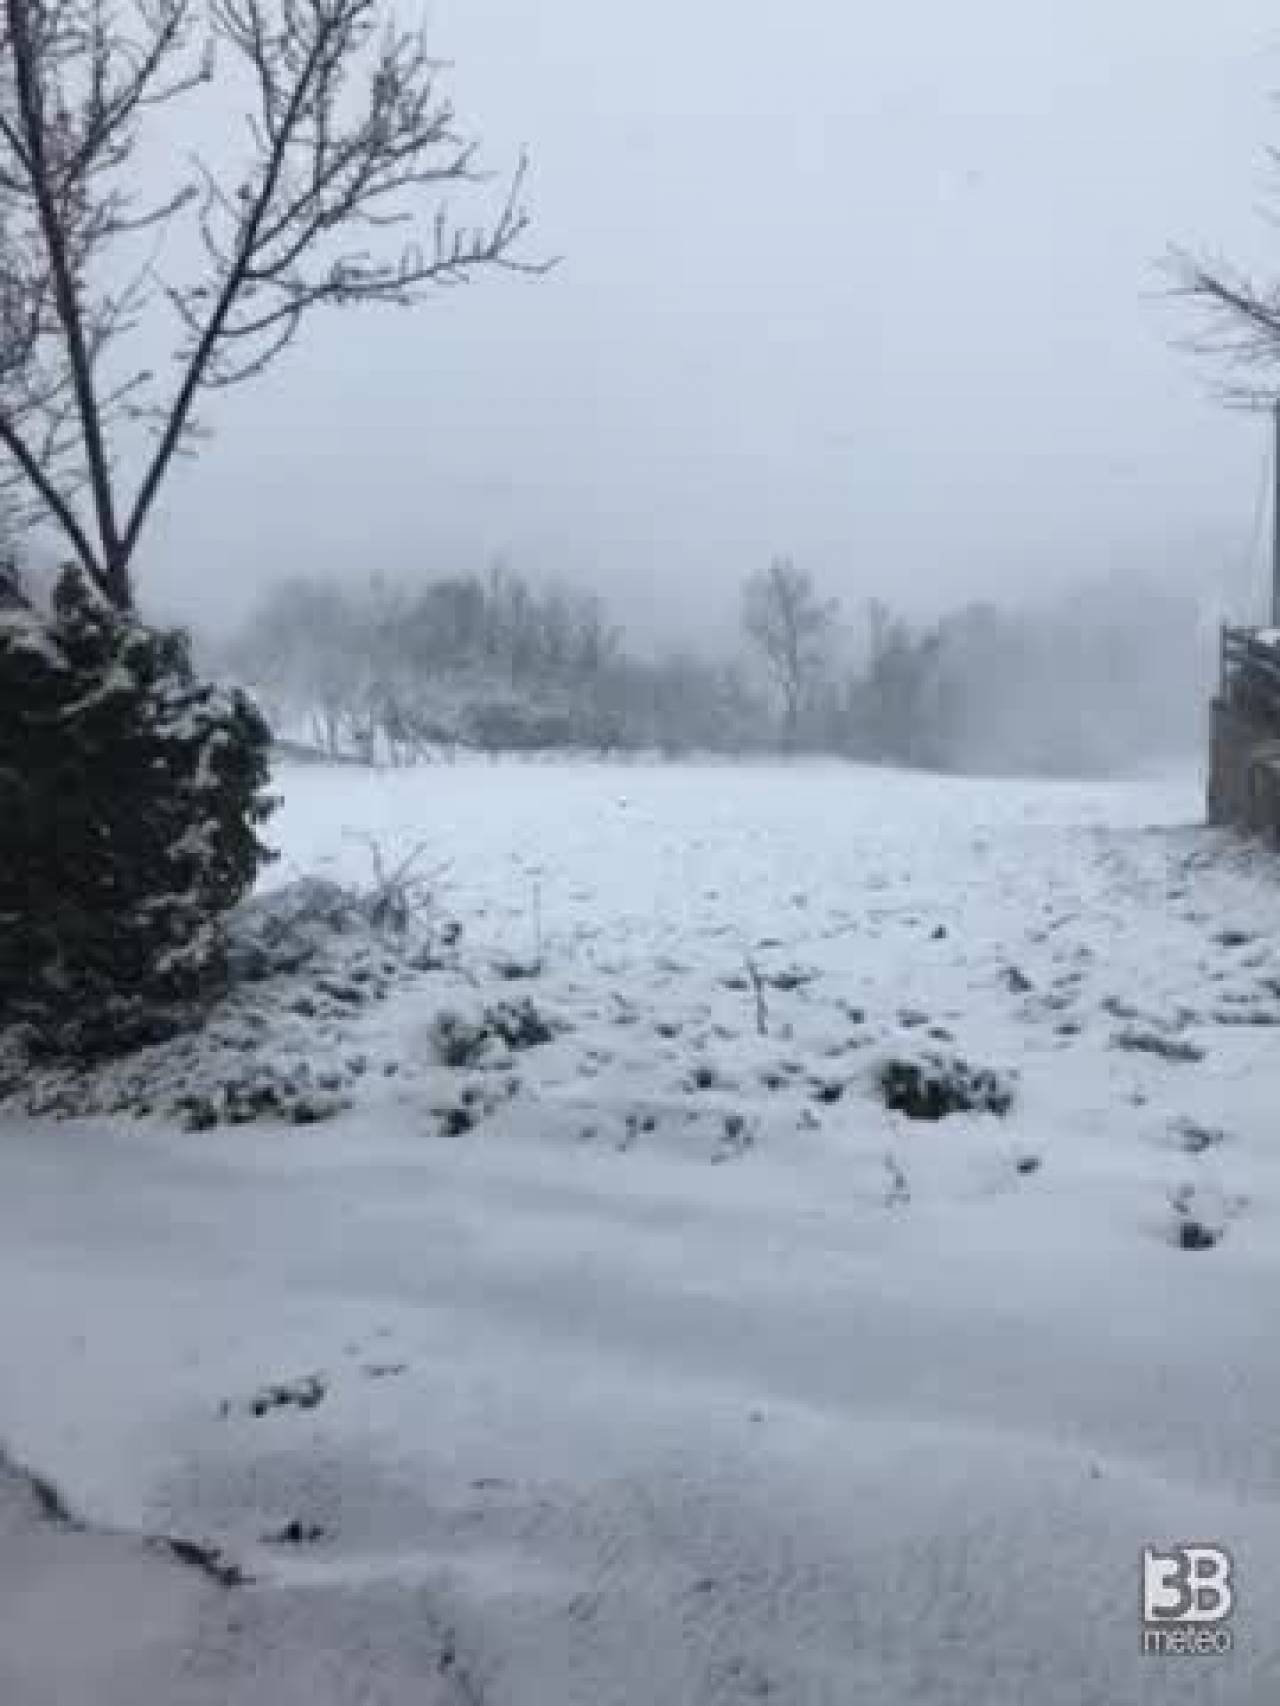 Meteo cronaca neve - Campania, colle Sannita, Benevento. Video